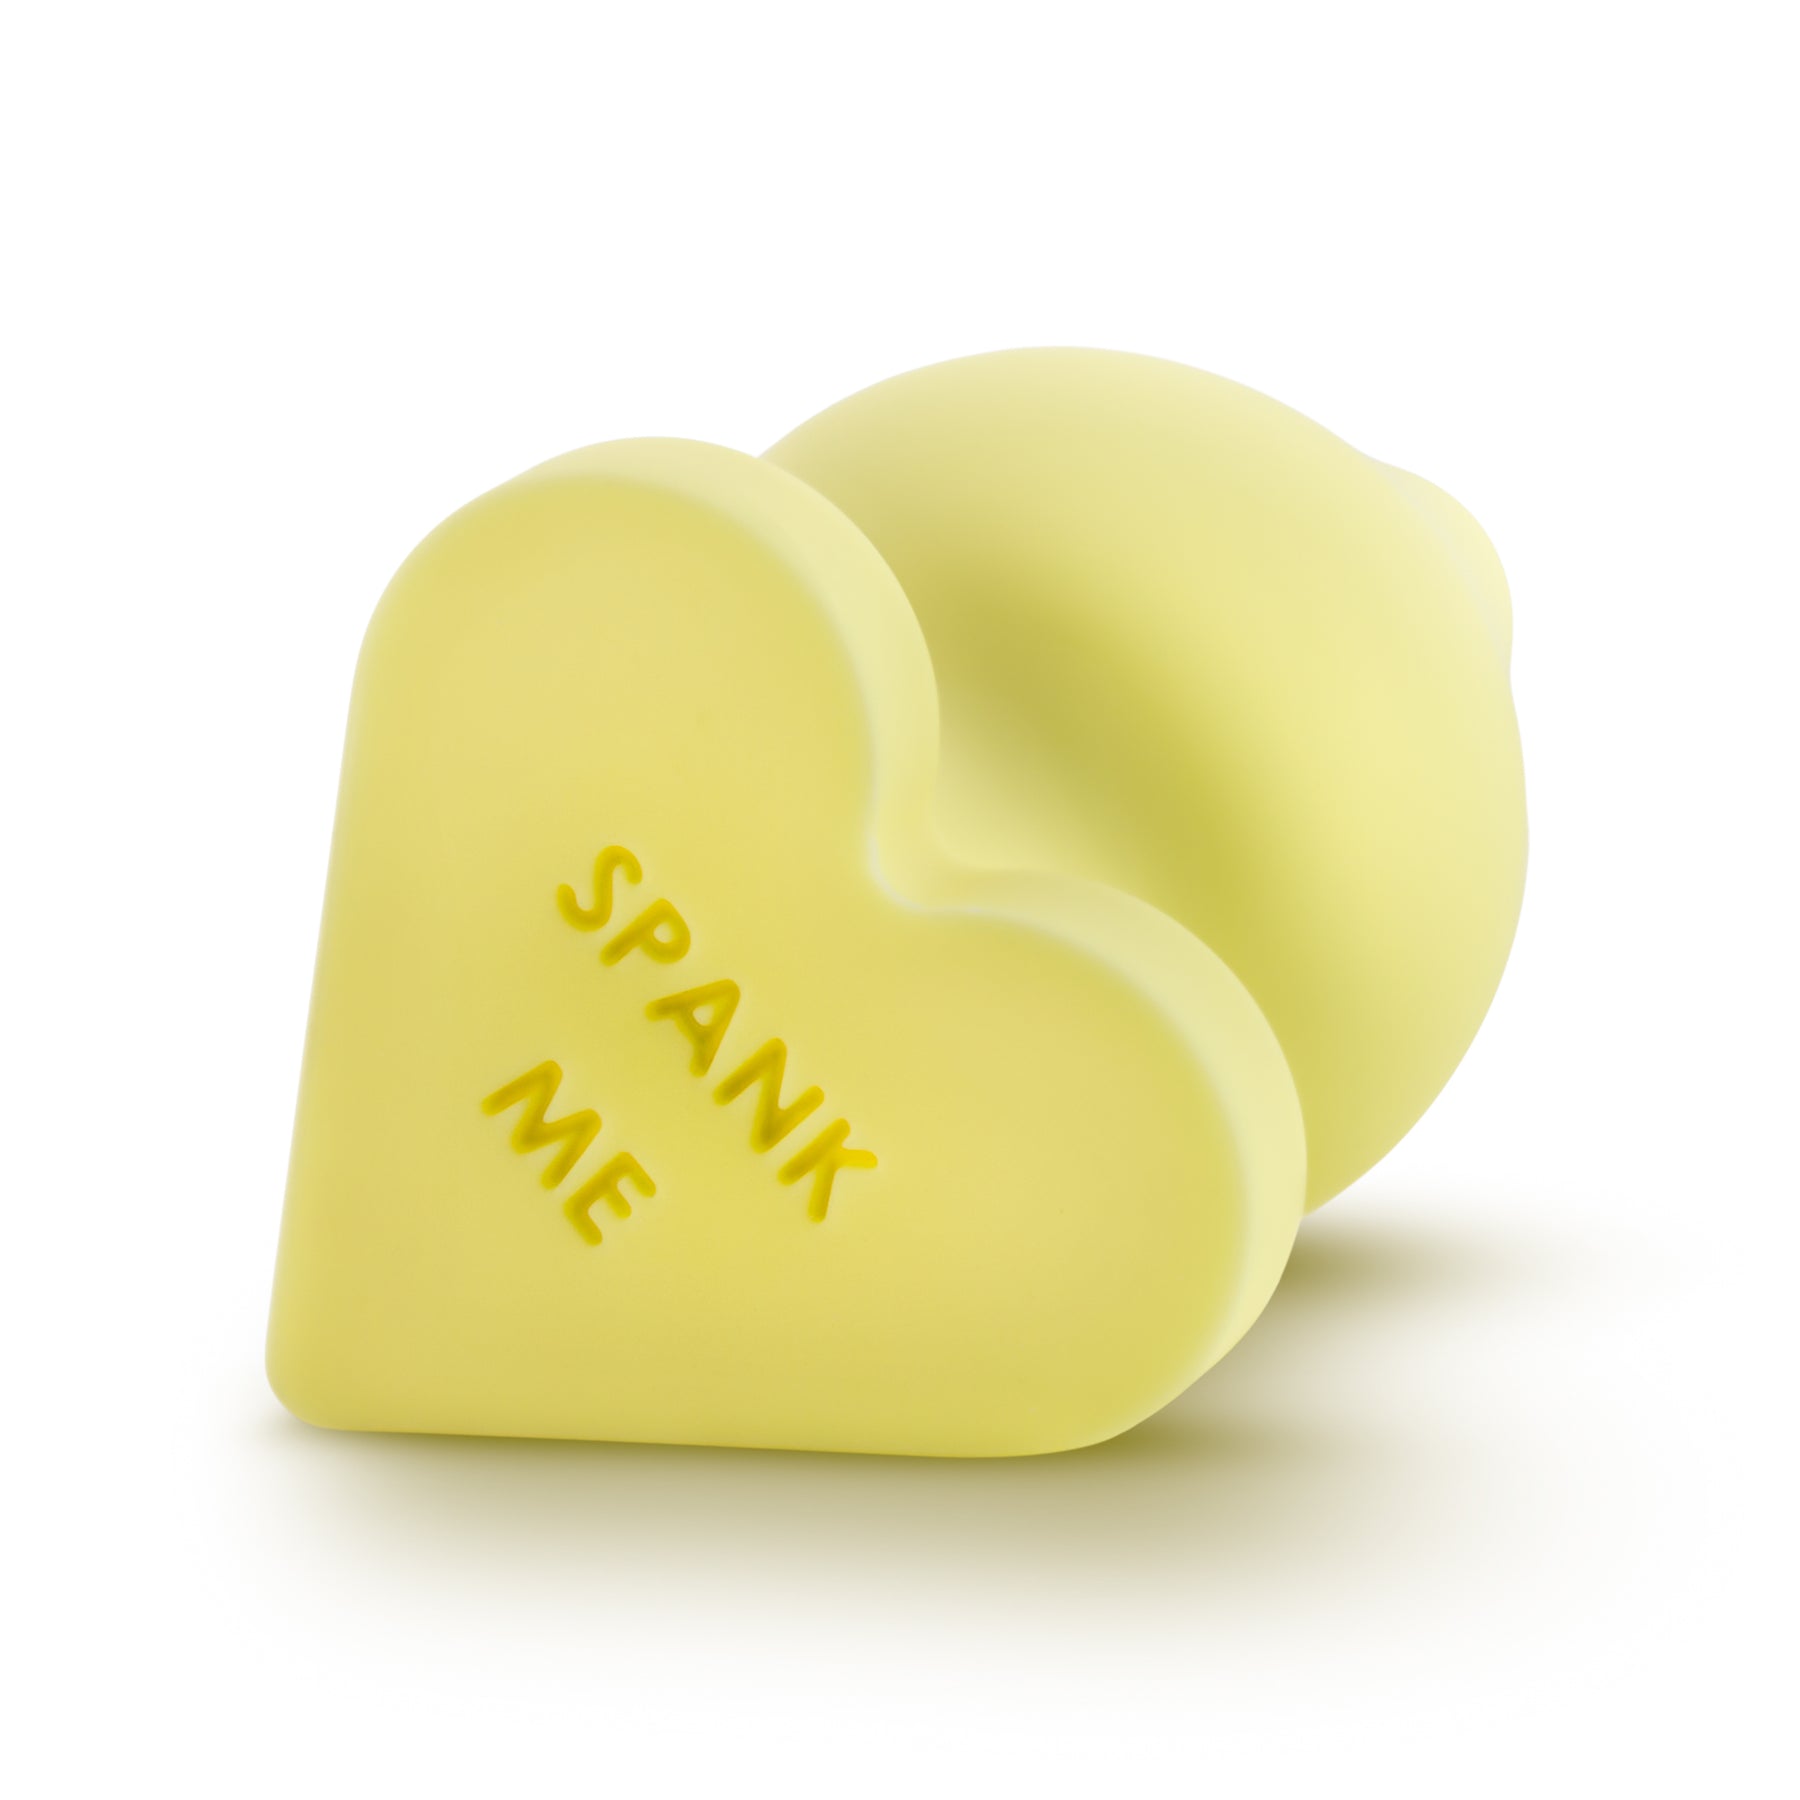 Naughty Candy Heart - Spank Me - Yellow